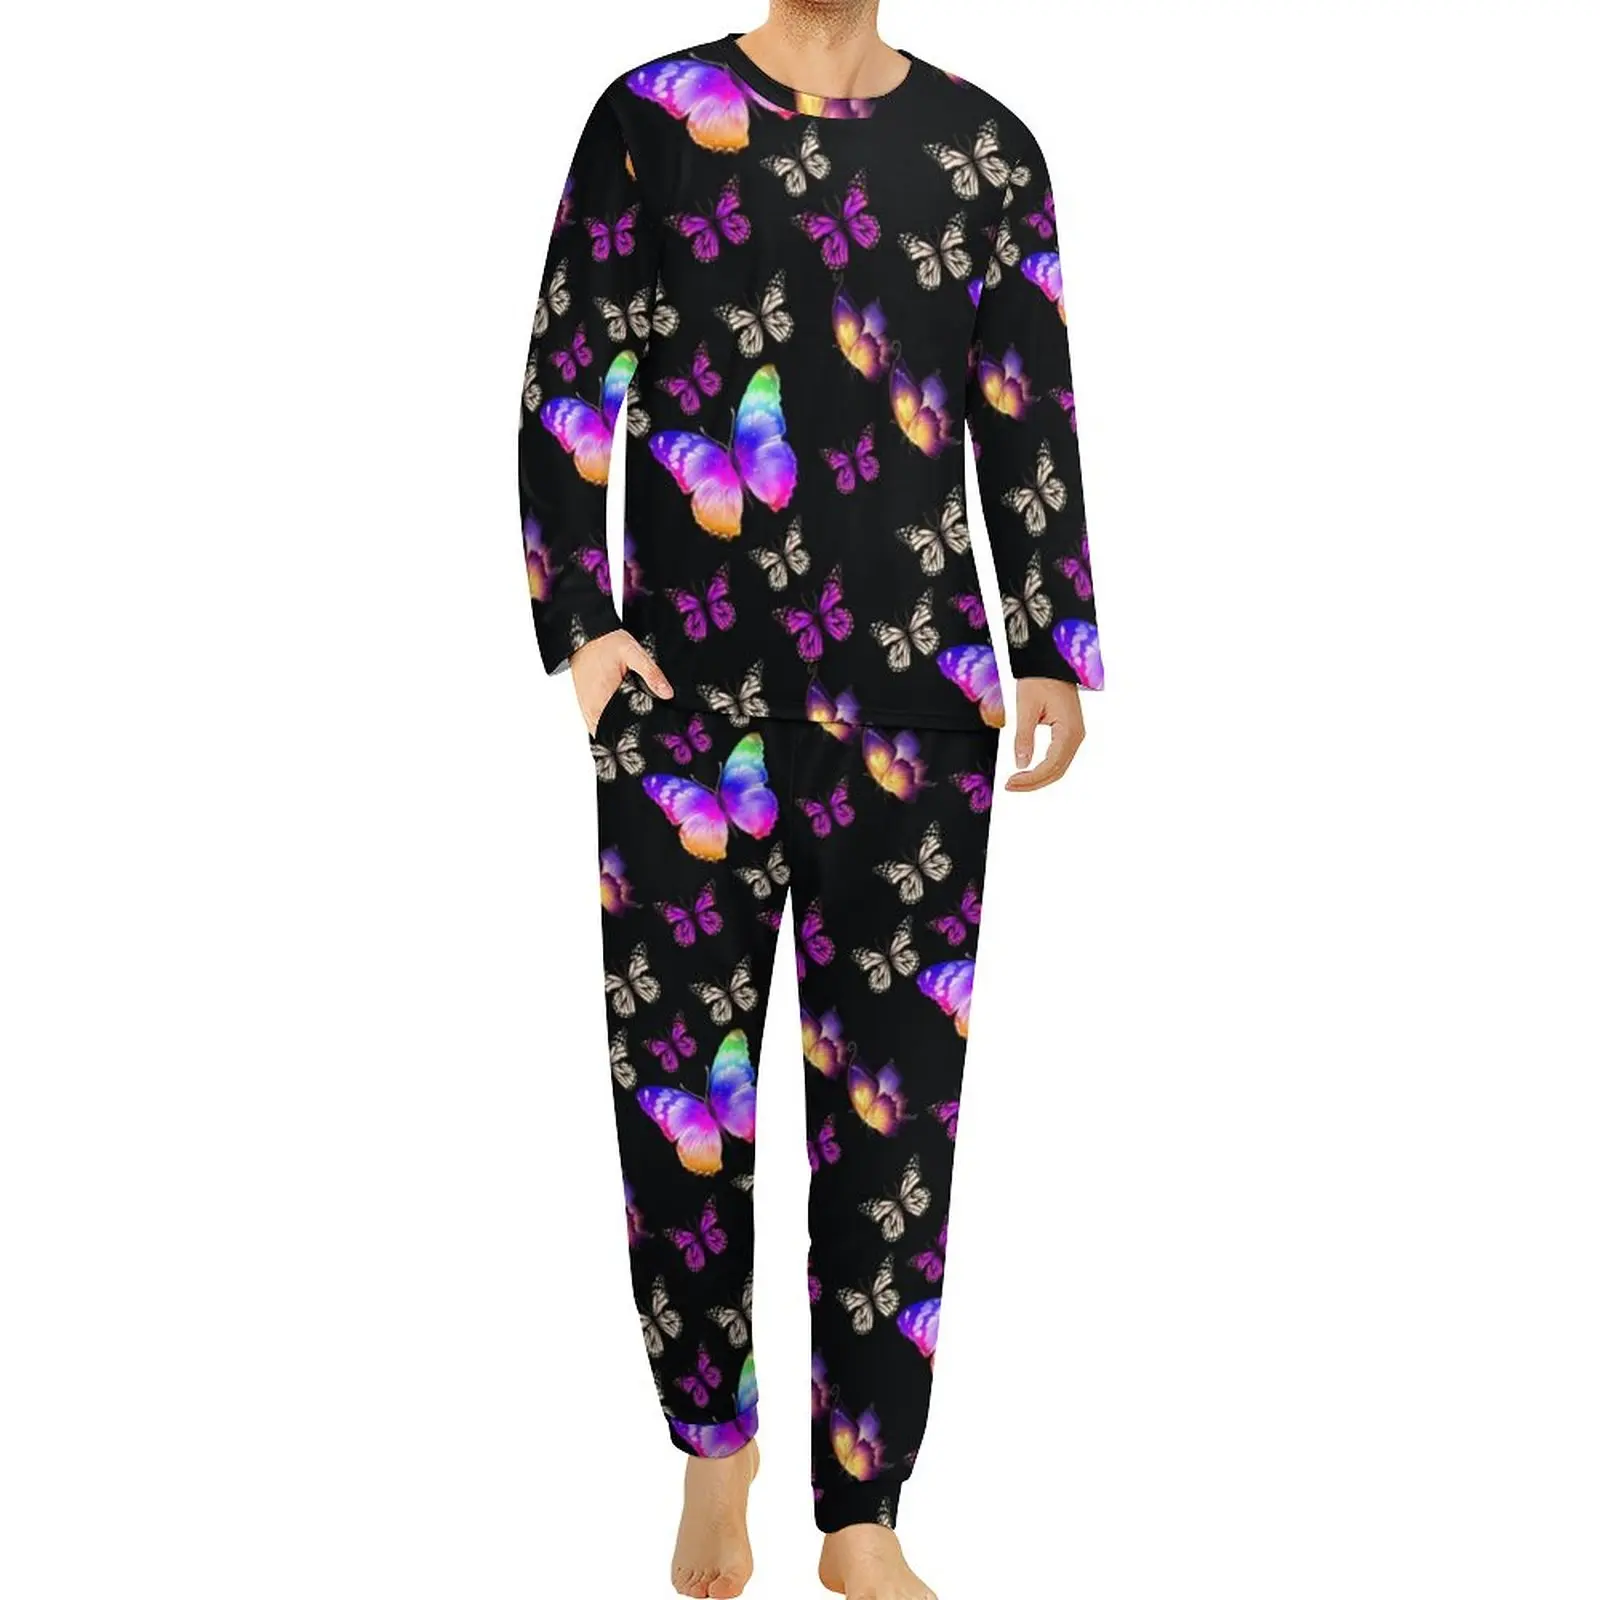 Neon Butterfly Pajamas Male Colorful Animal Print Warm Sleepwear Long Sleeves 2 Pieces Night Graphic Pajama Sets 3XL 4XL 5XL